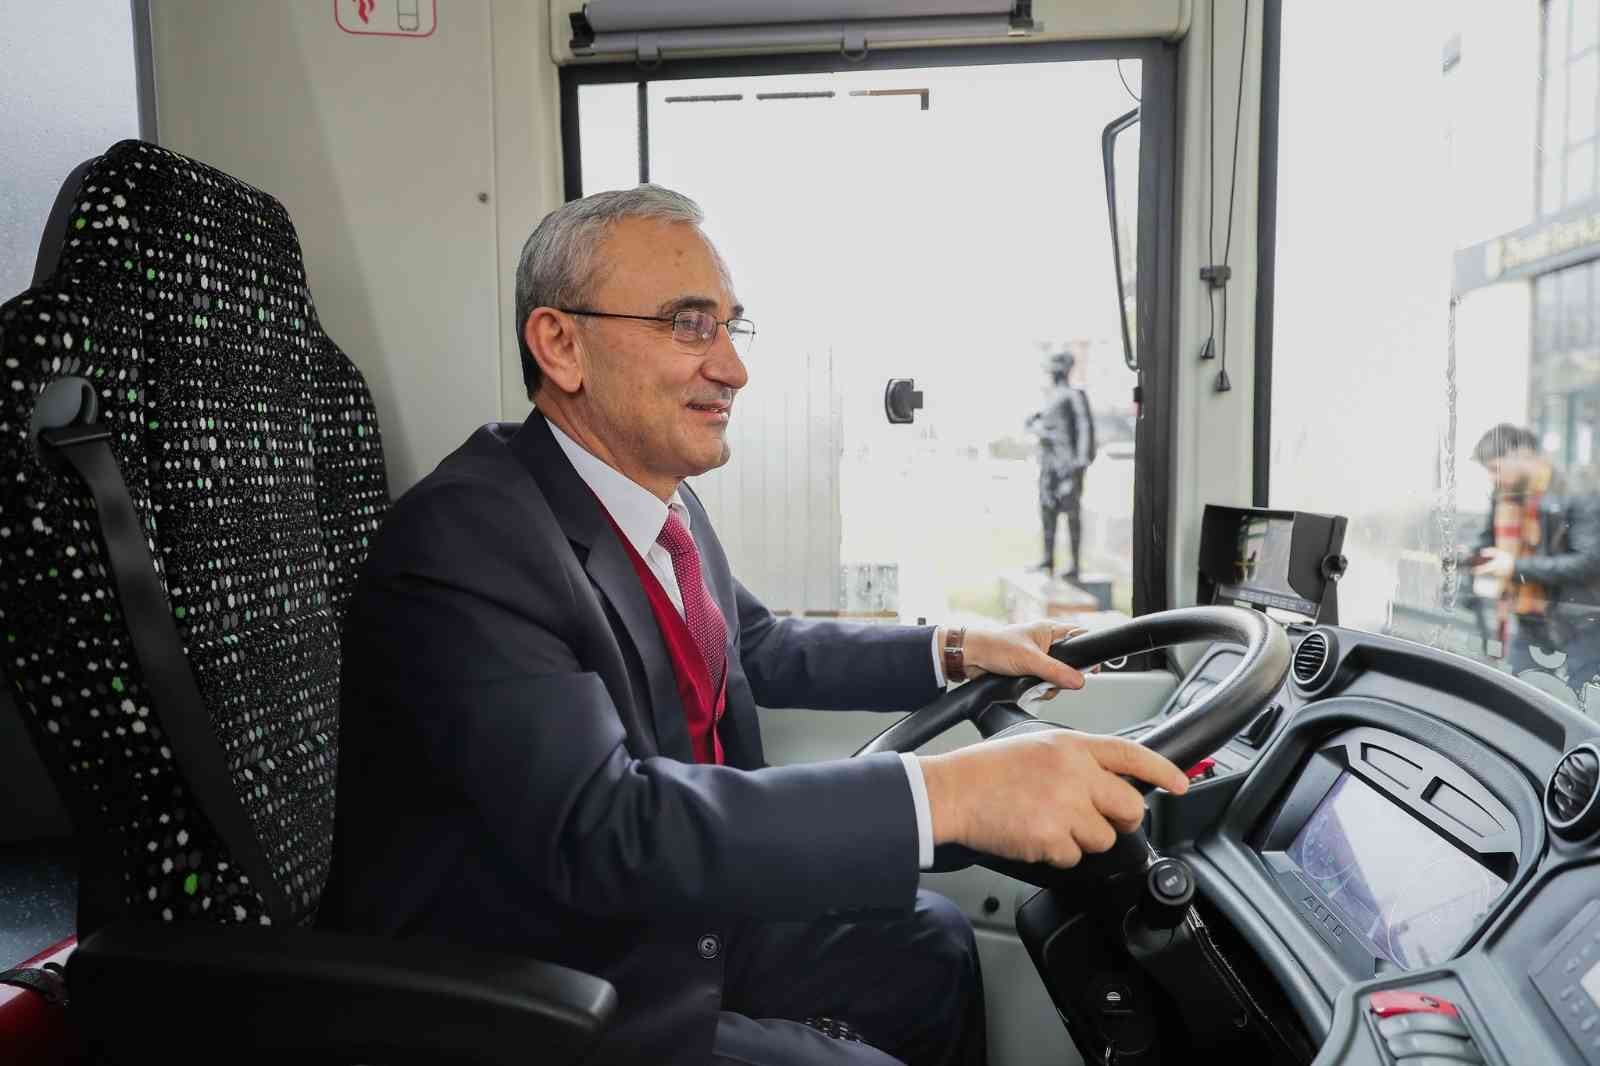 Başkan Alim Işık: Yüzde yüz yerli elektrikli otobüs Kütahya’ya hayırlı olsun #kutahya